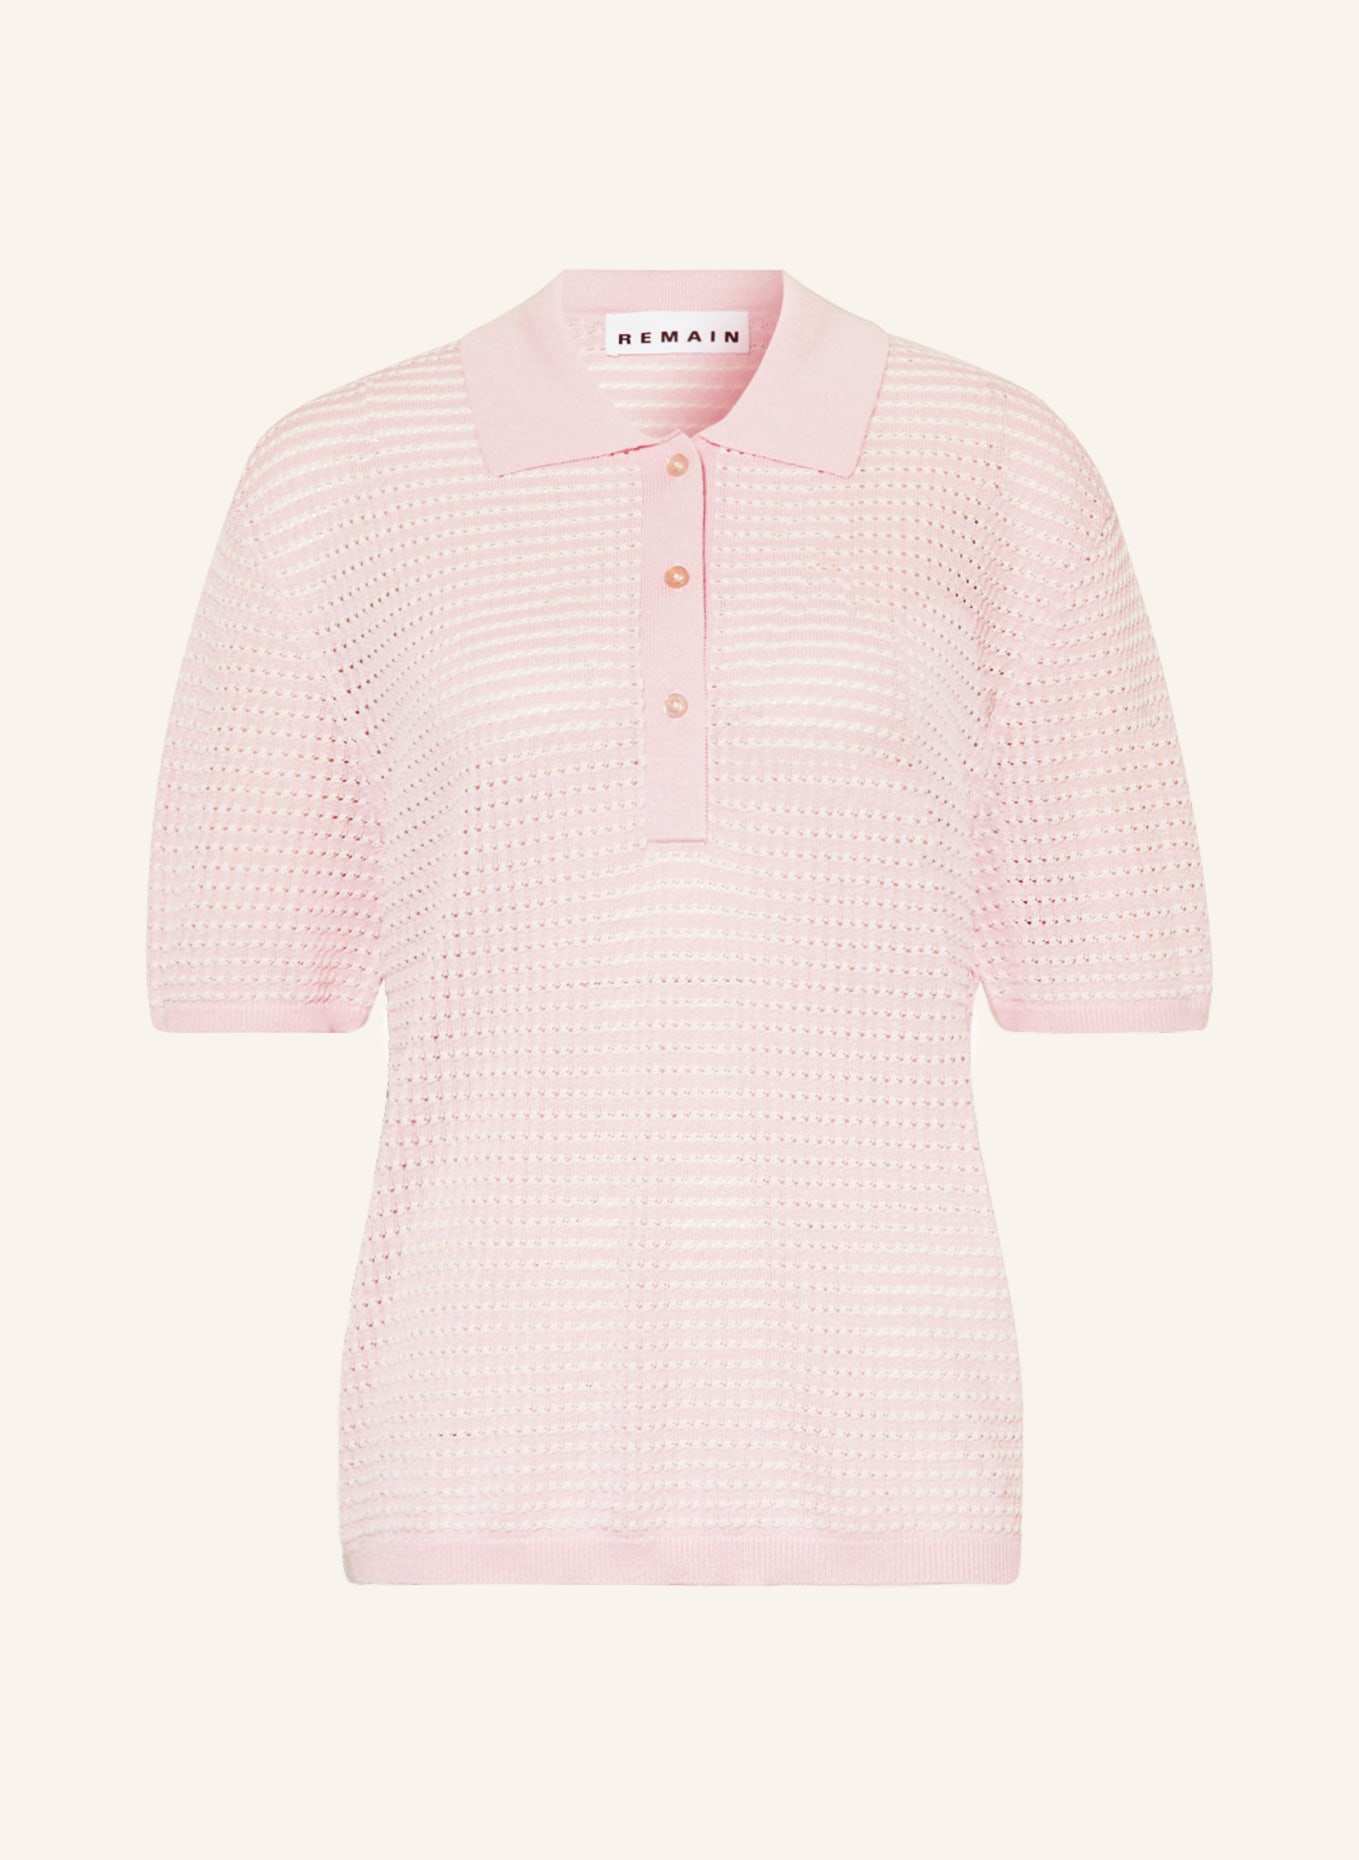 REMAIN Strick-Poloshirt, Farbe: ROSA/ WEISS (Bild 1)